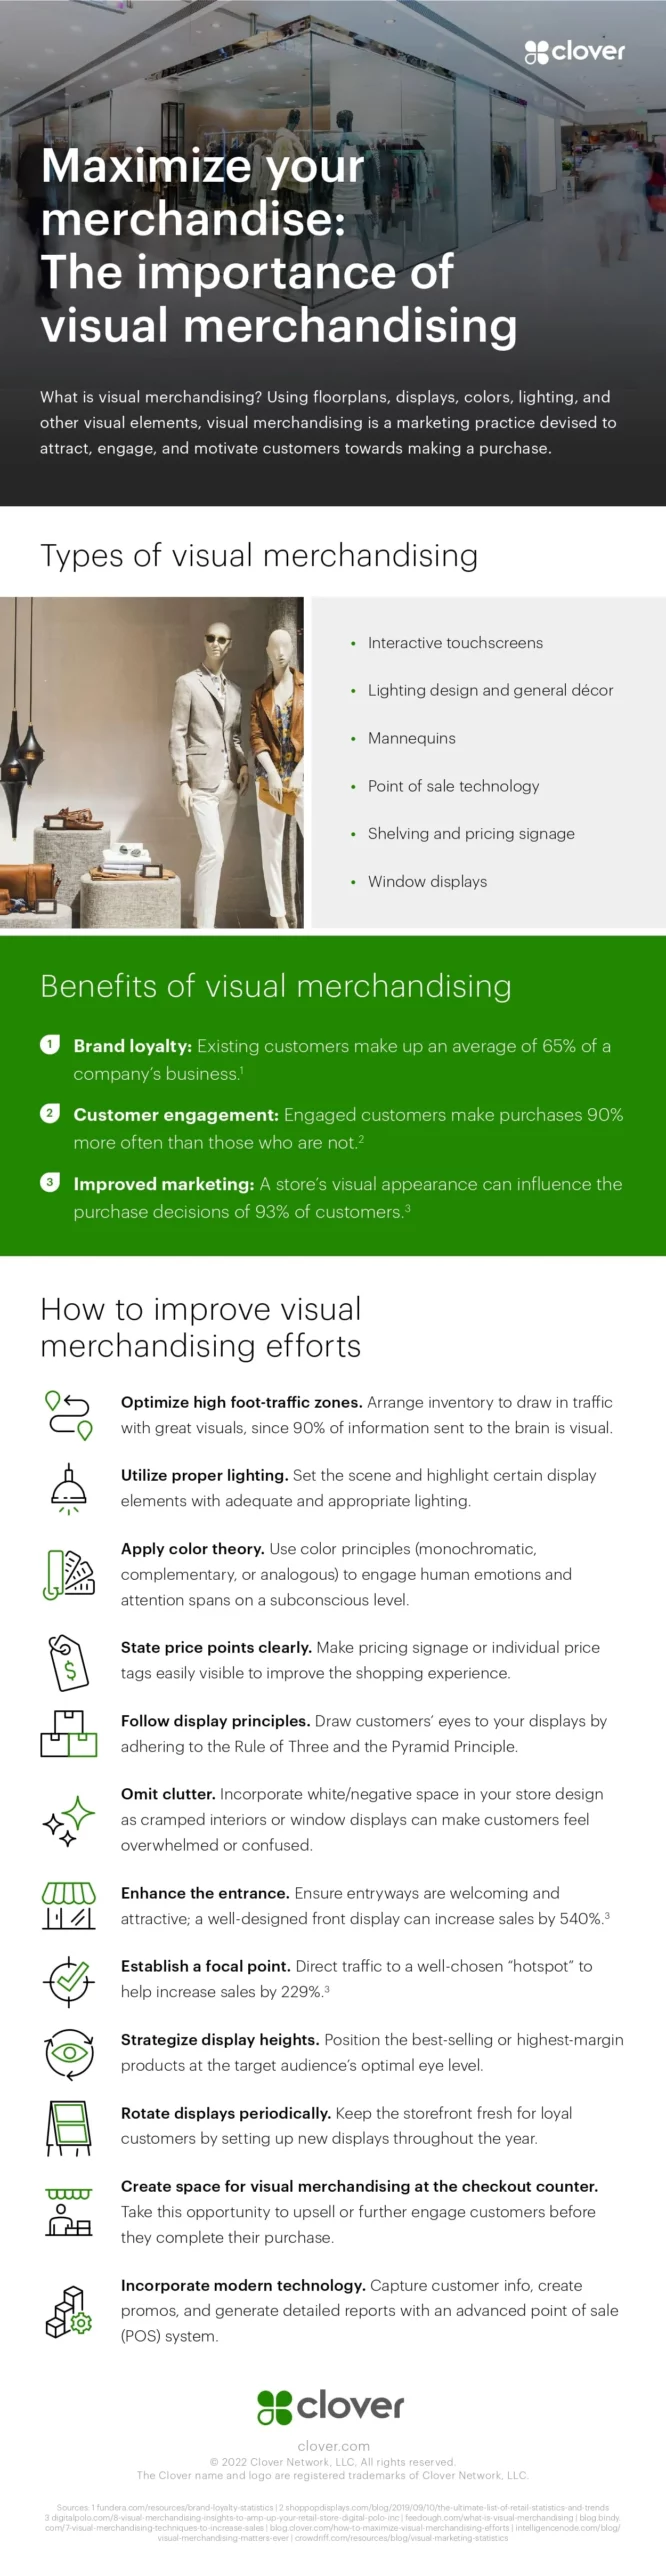 importance of visual merchandising